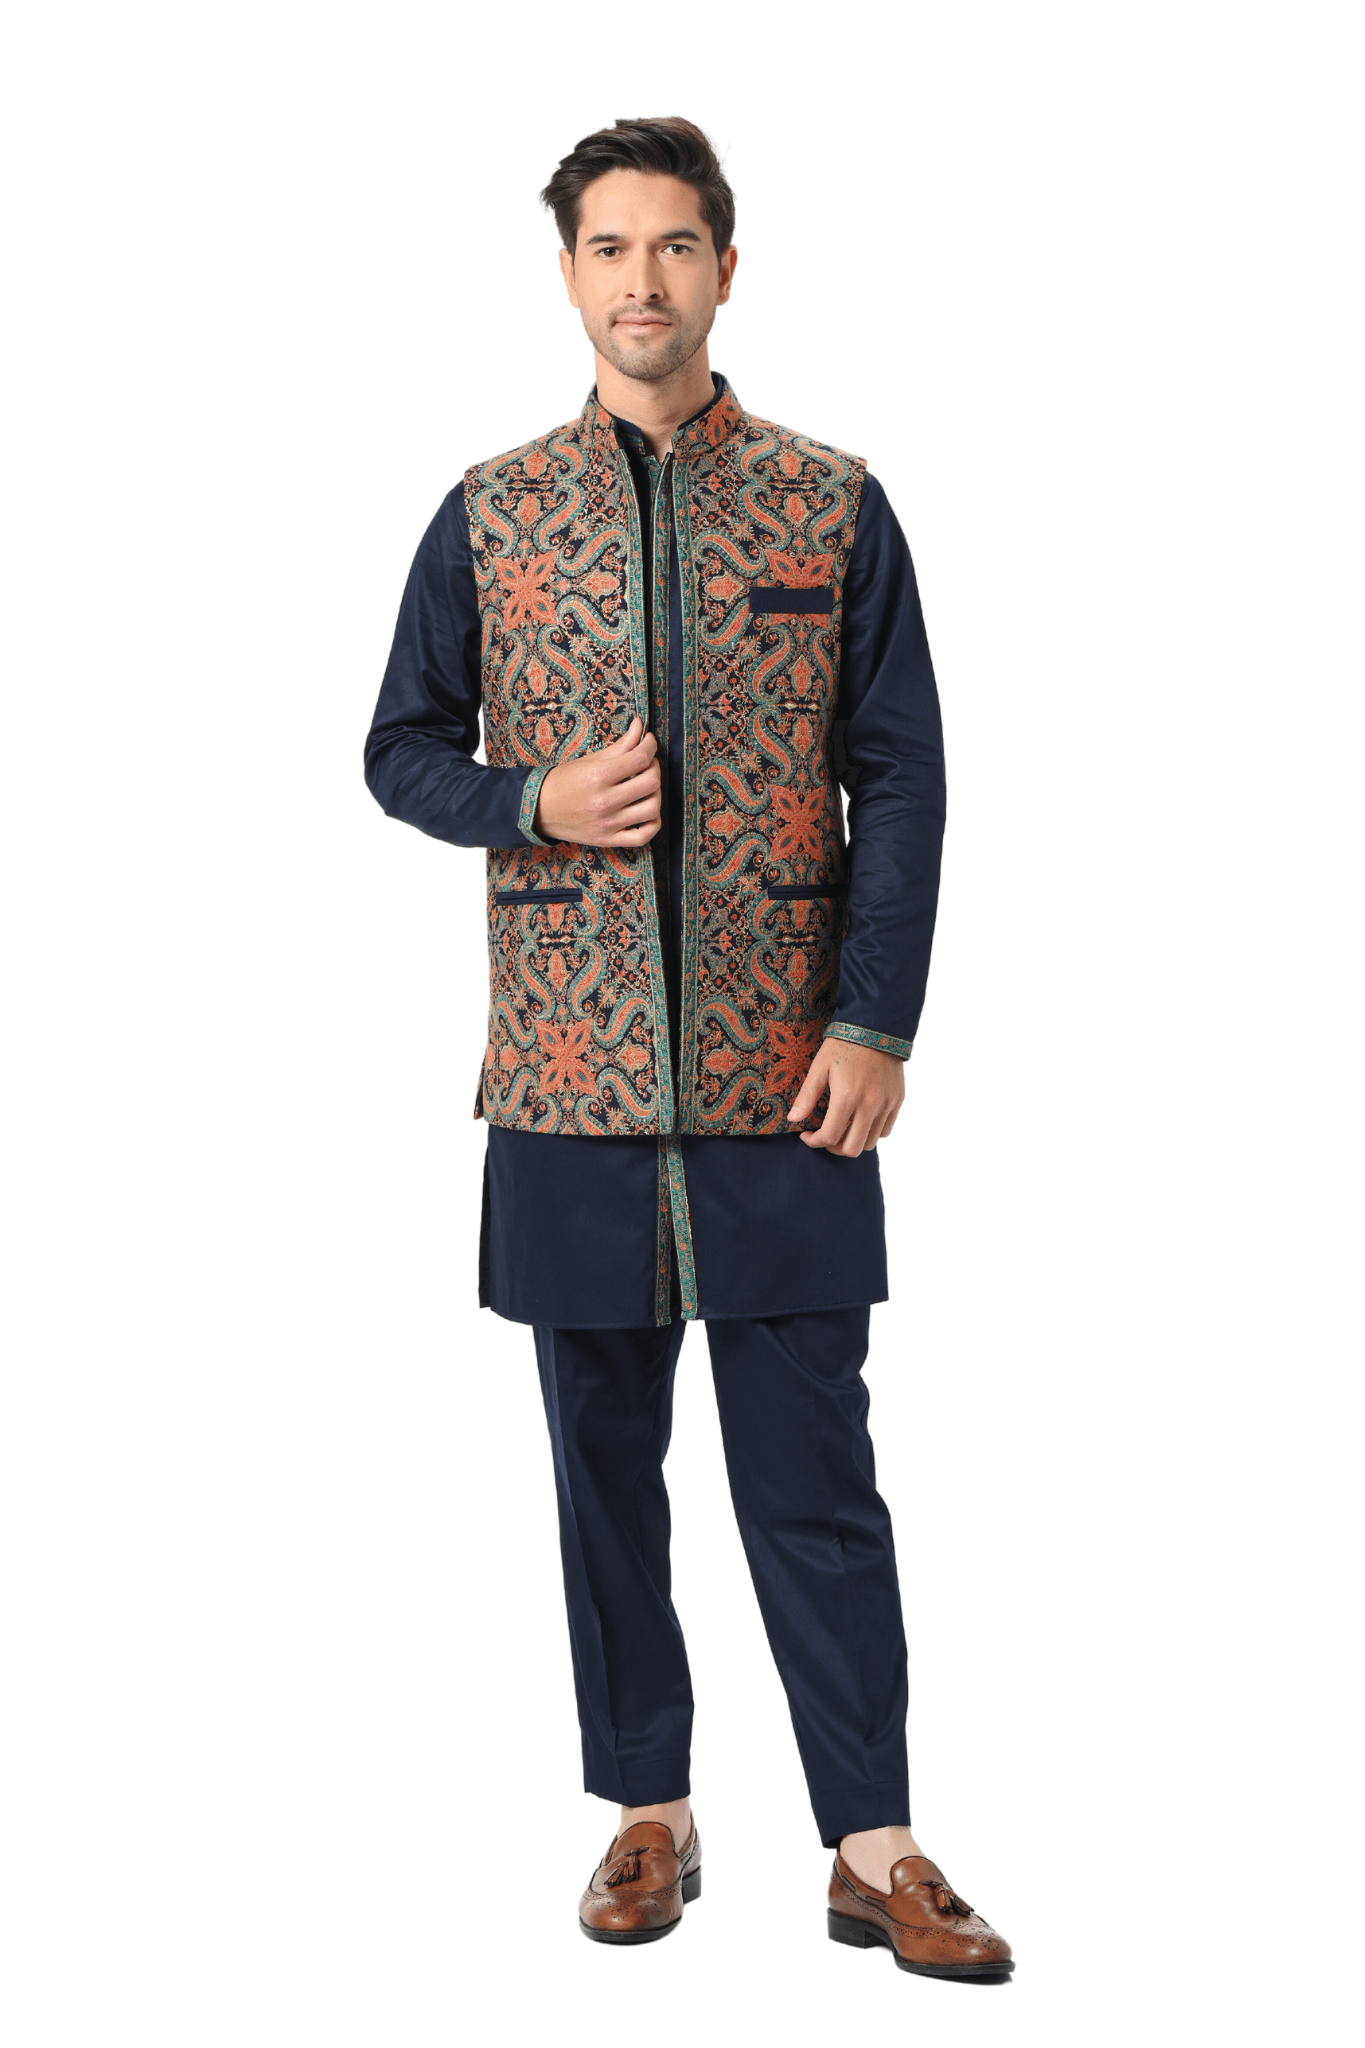 Kashmiri Woolen Jacket online in India at shiddat.com